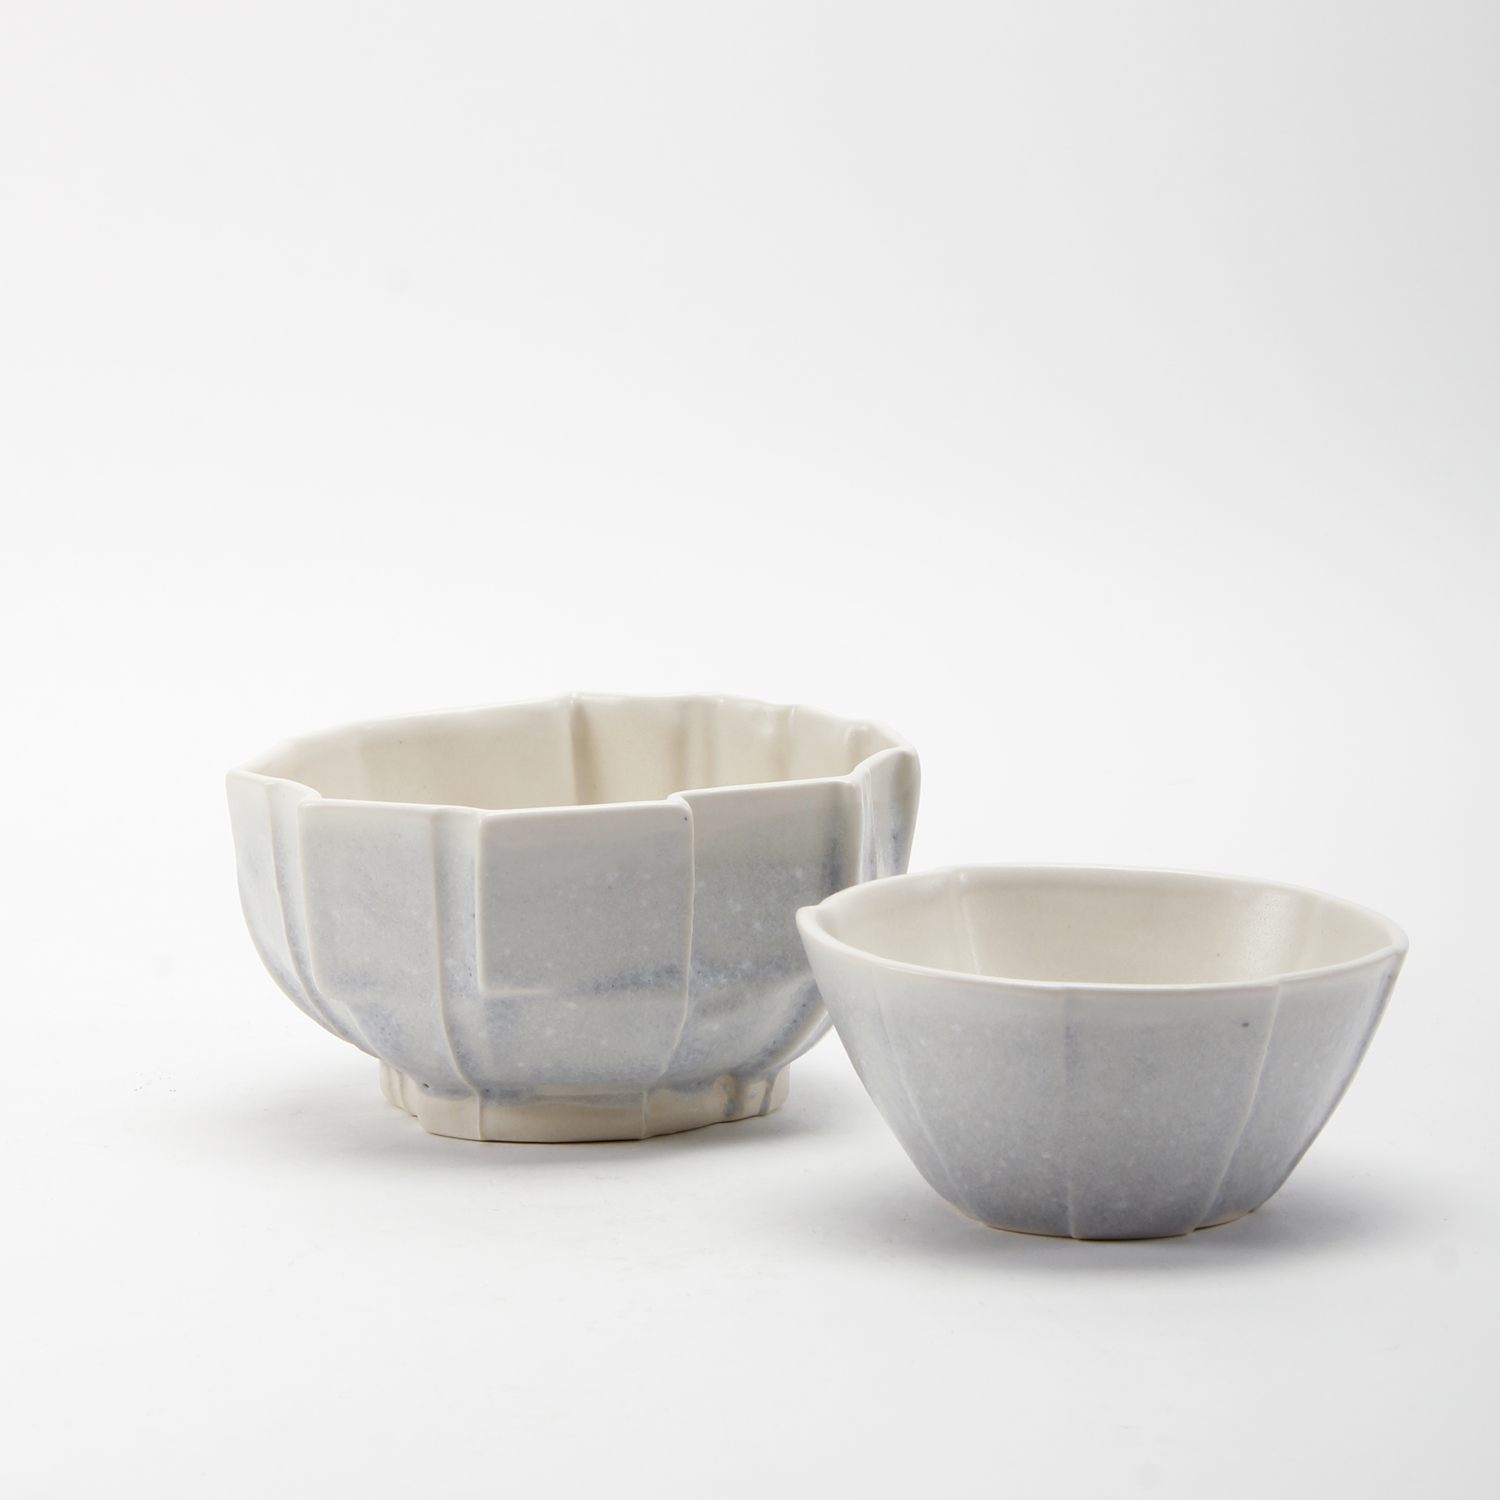 Karla Rivera: Small Bowl Product Image 3 of 3